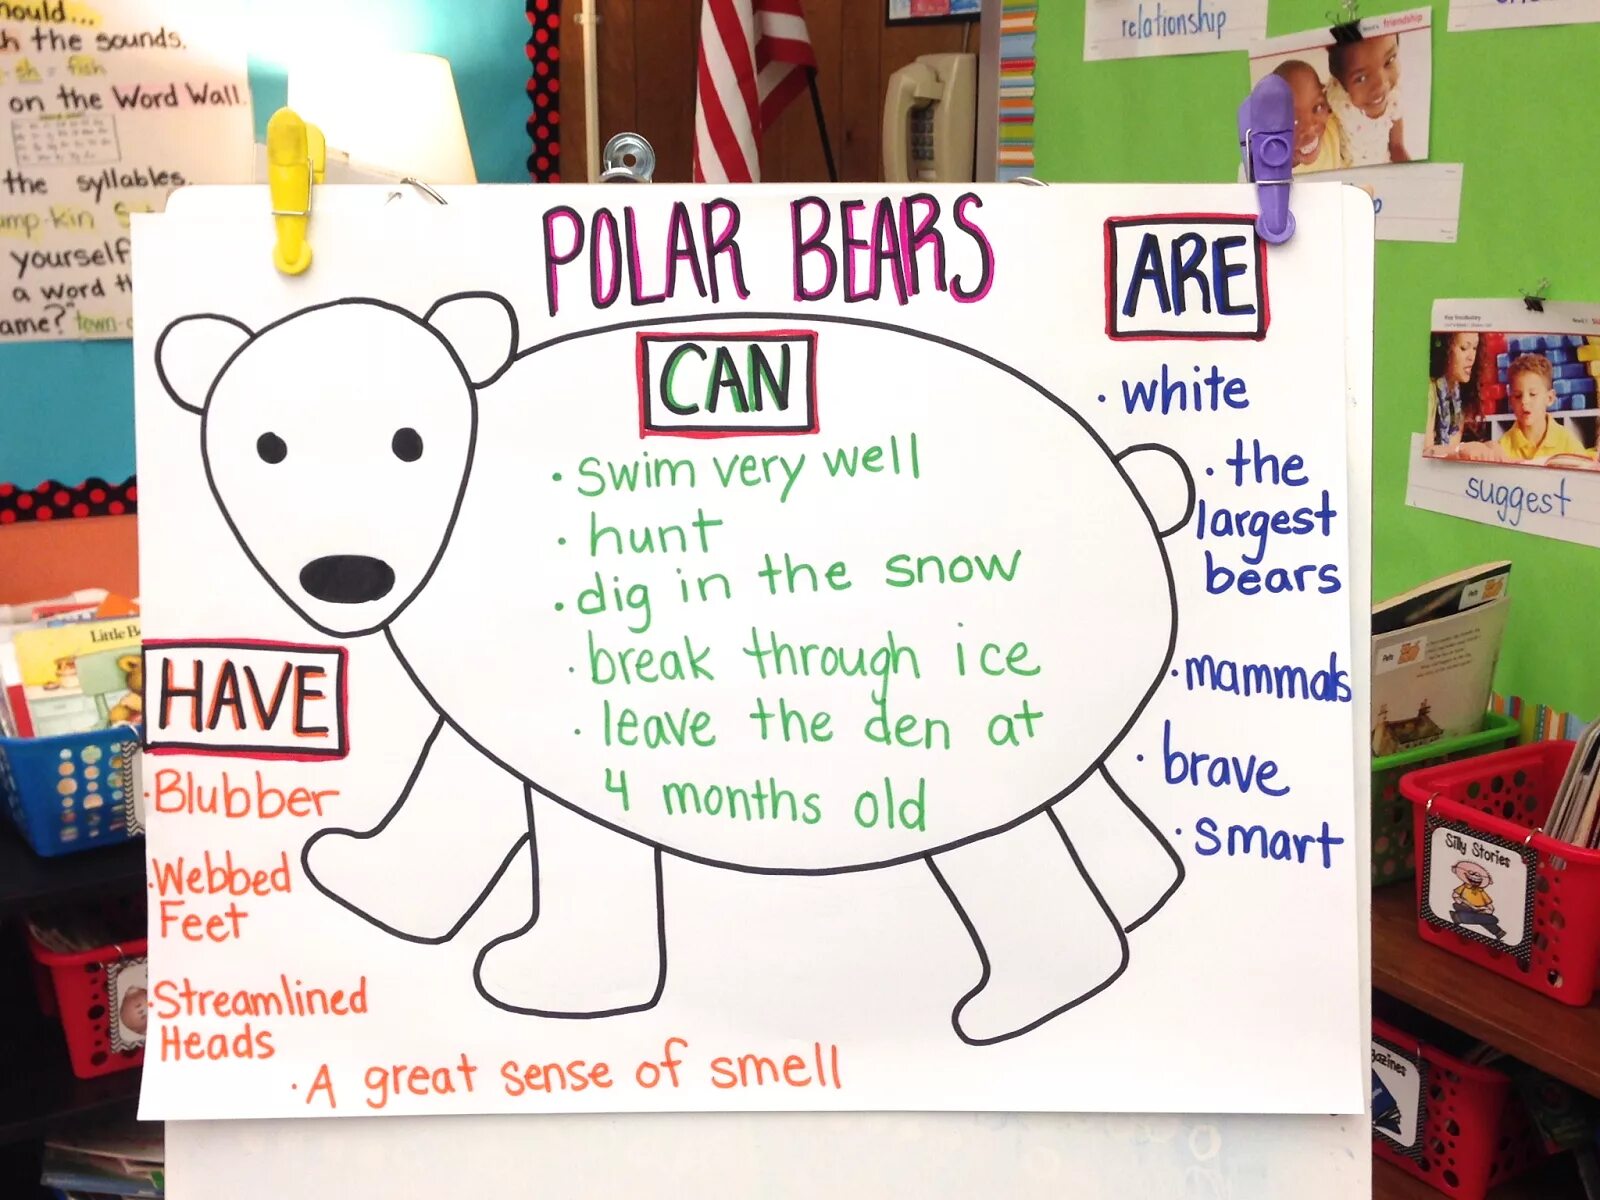 Polar Bear information for Kids. Bear information. He swims very well